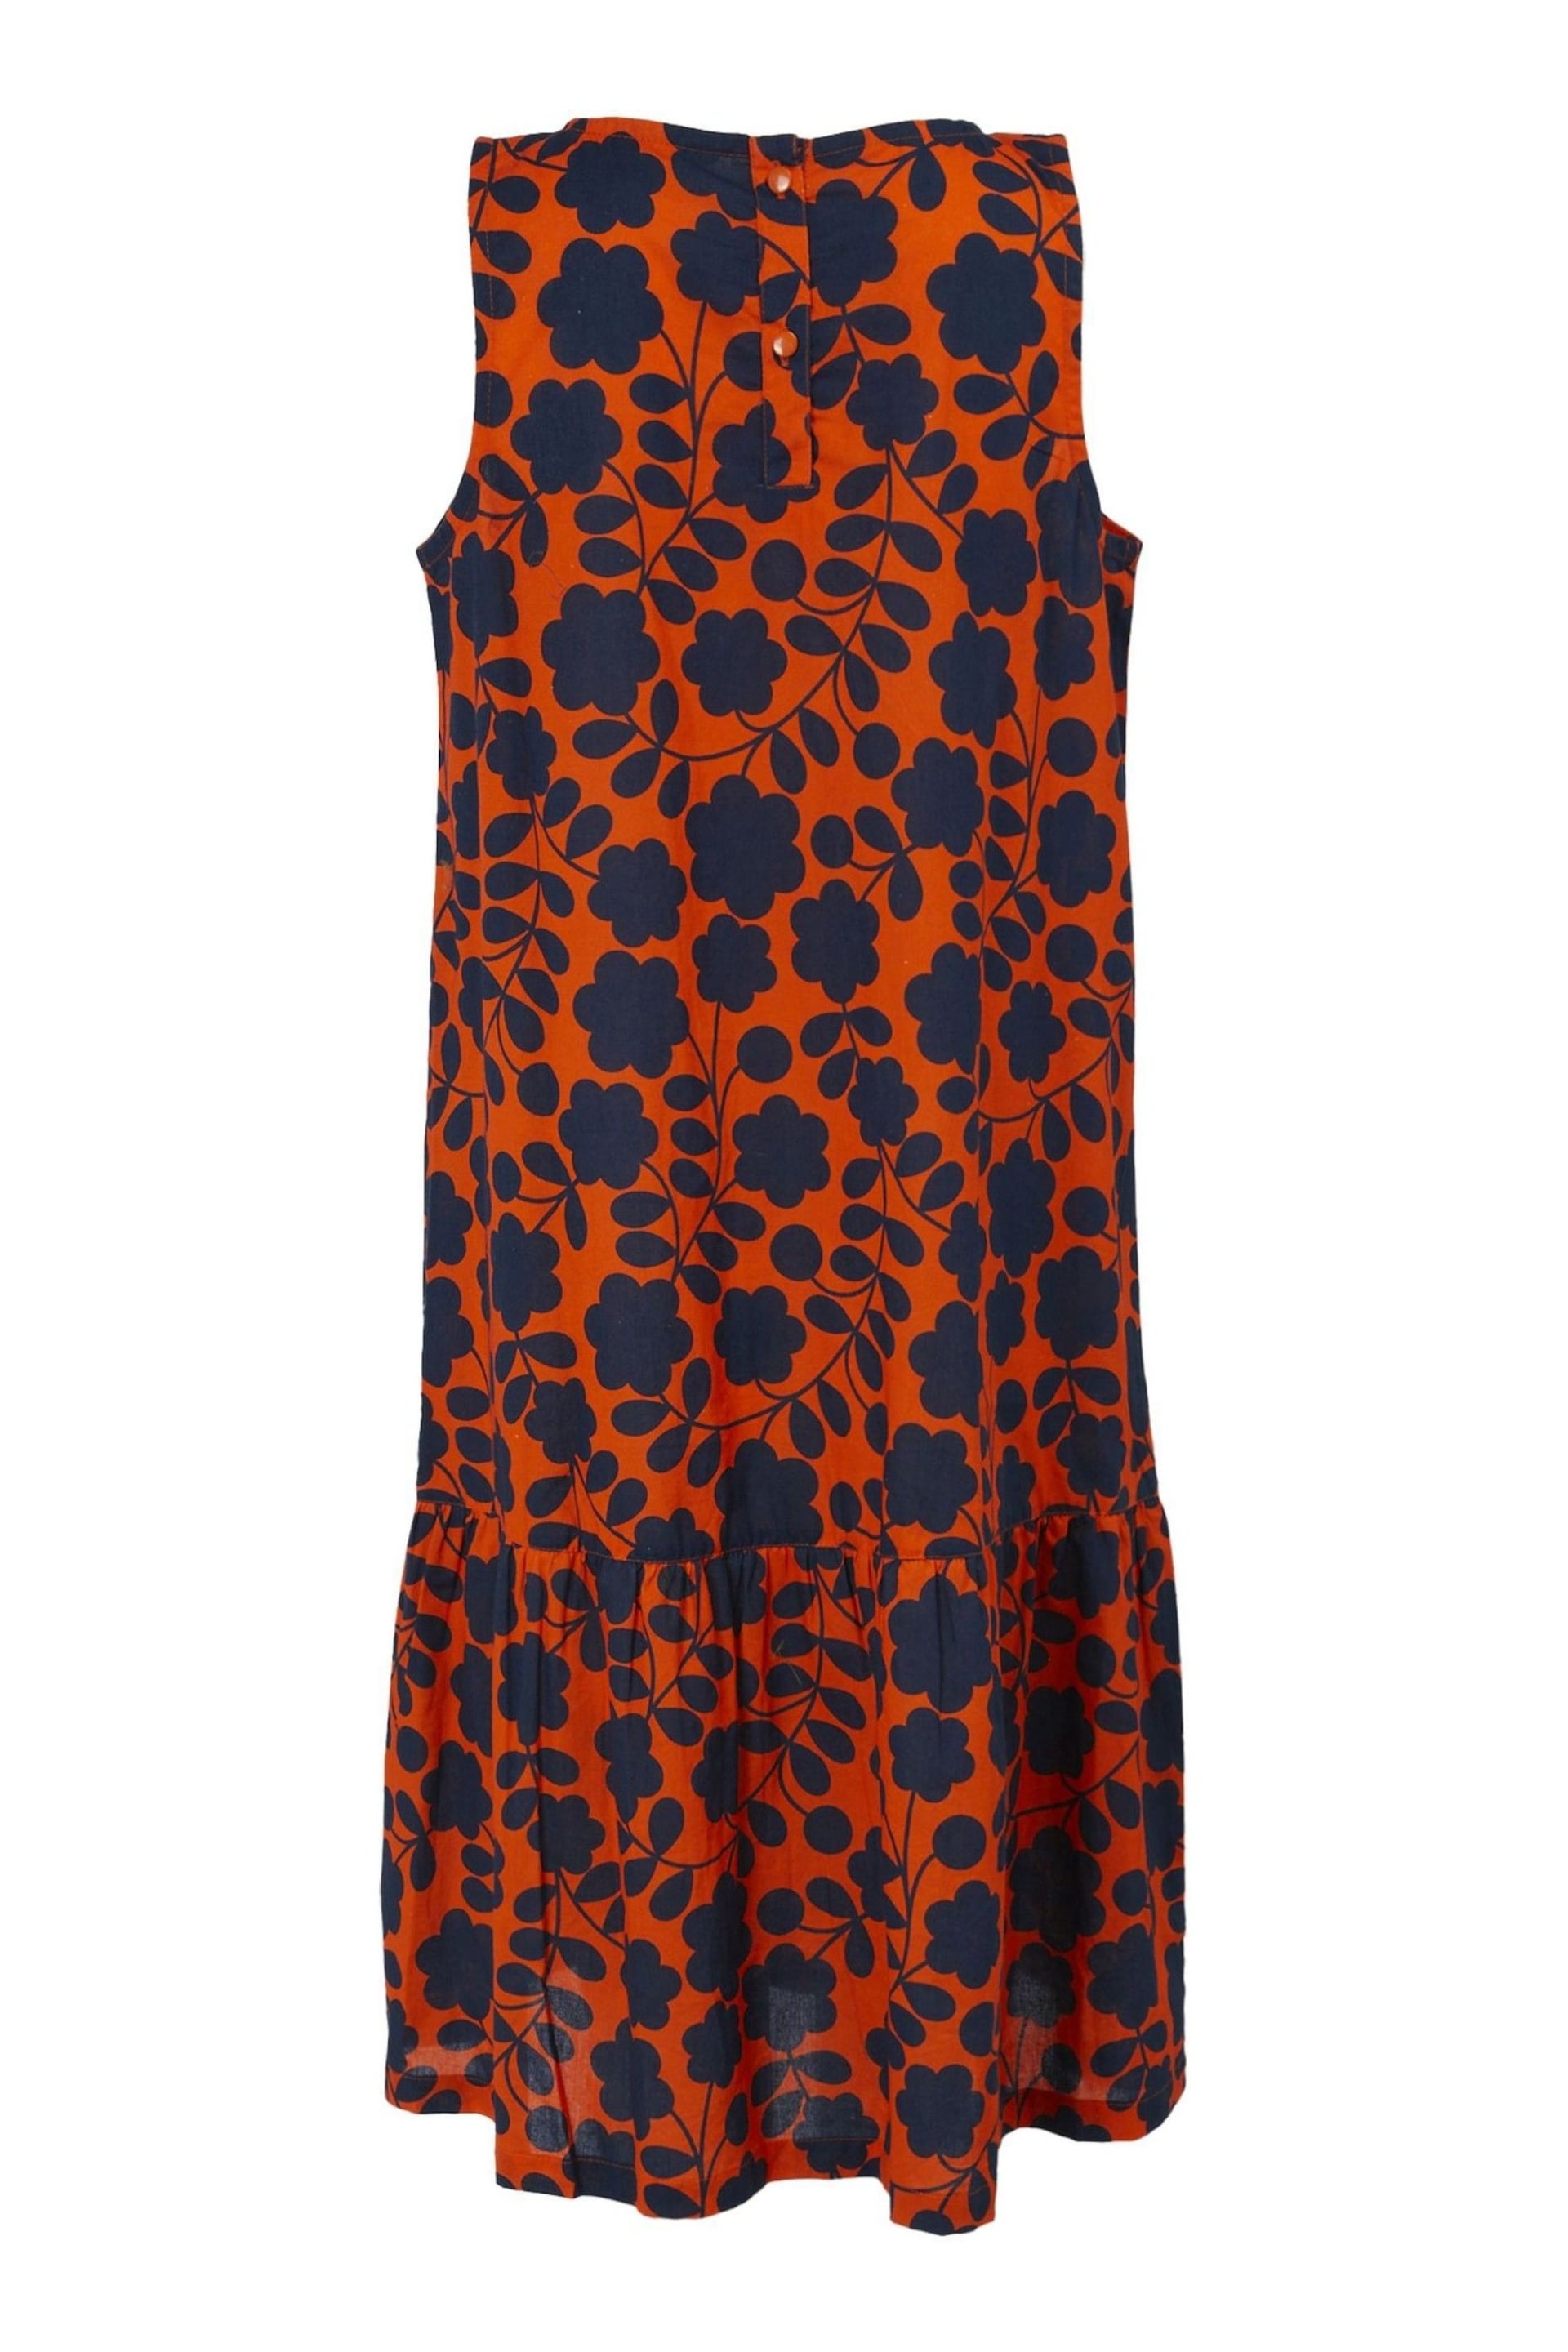 Regatta Orange Orla Kiely Summer Sleeveless Dress - Image 8 of 8